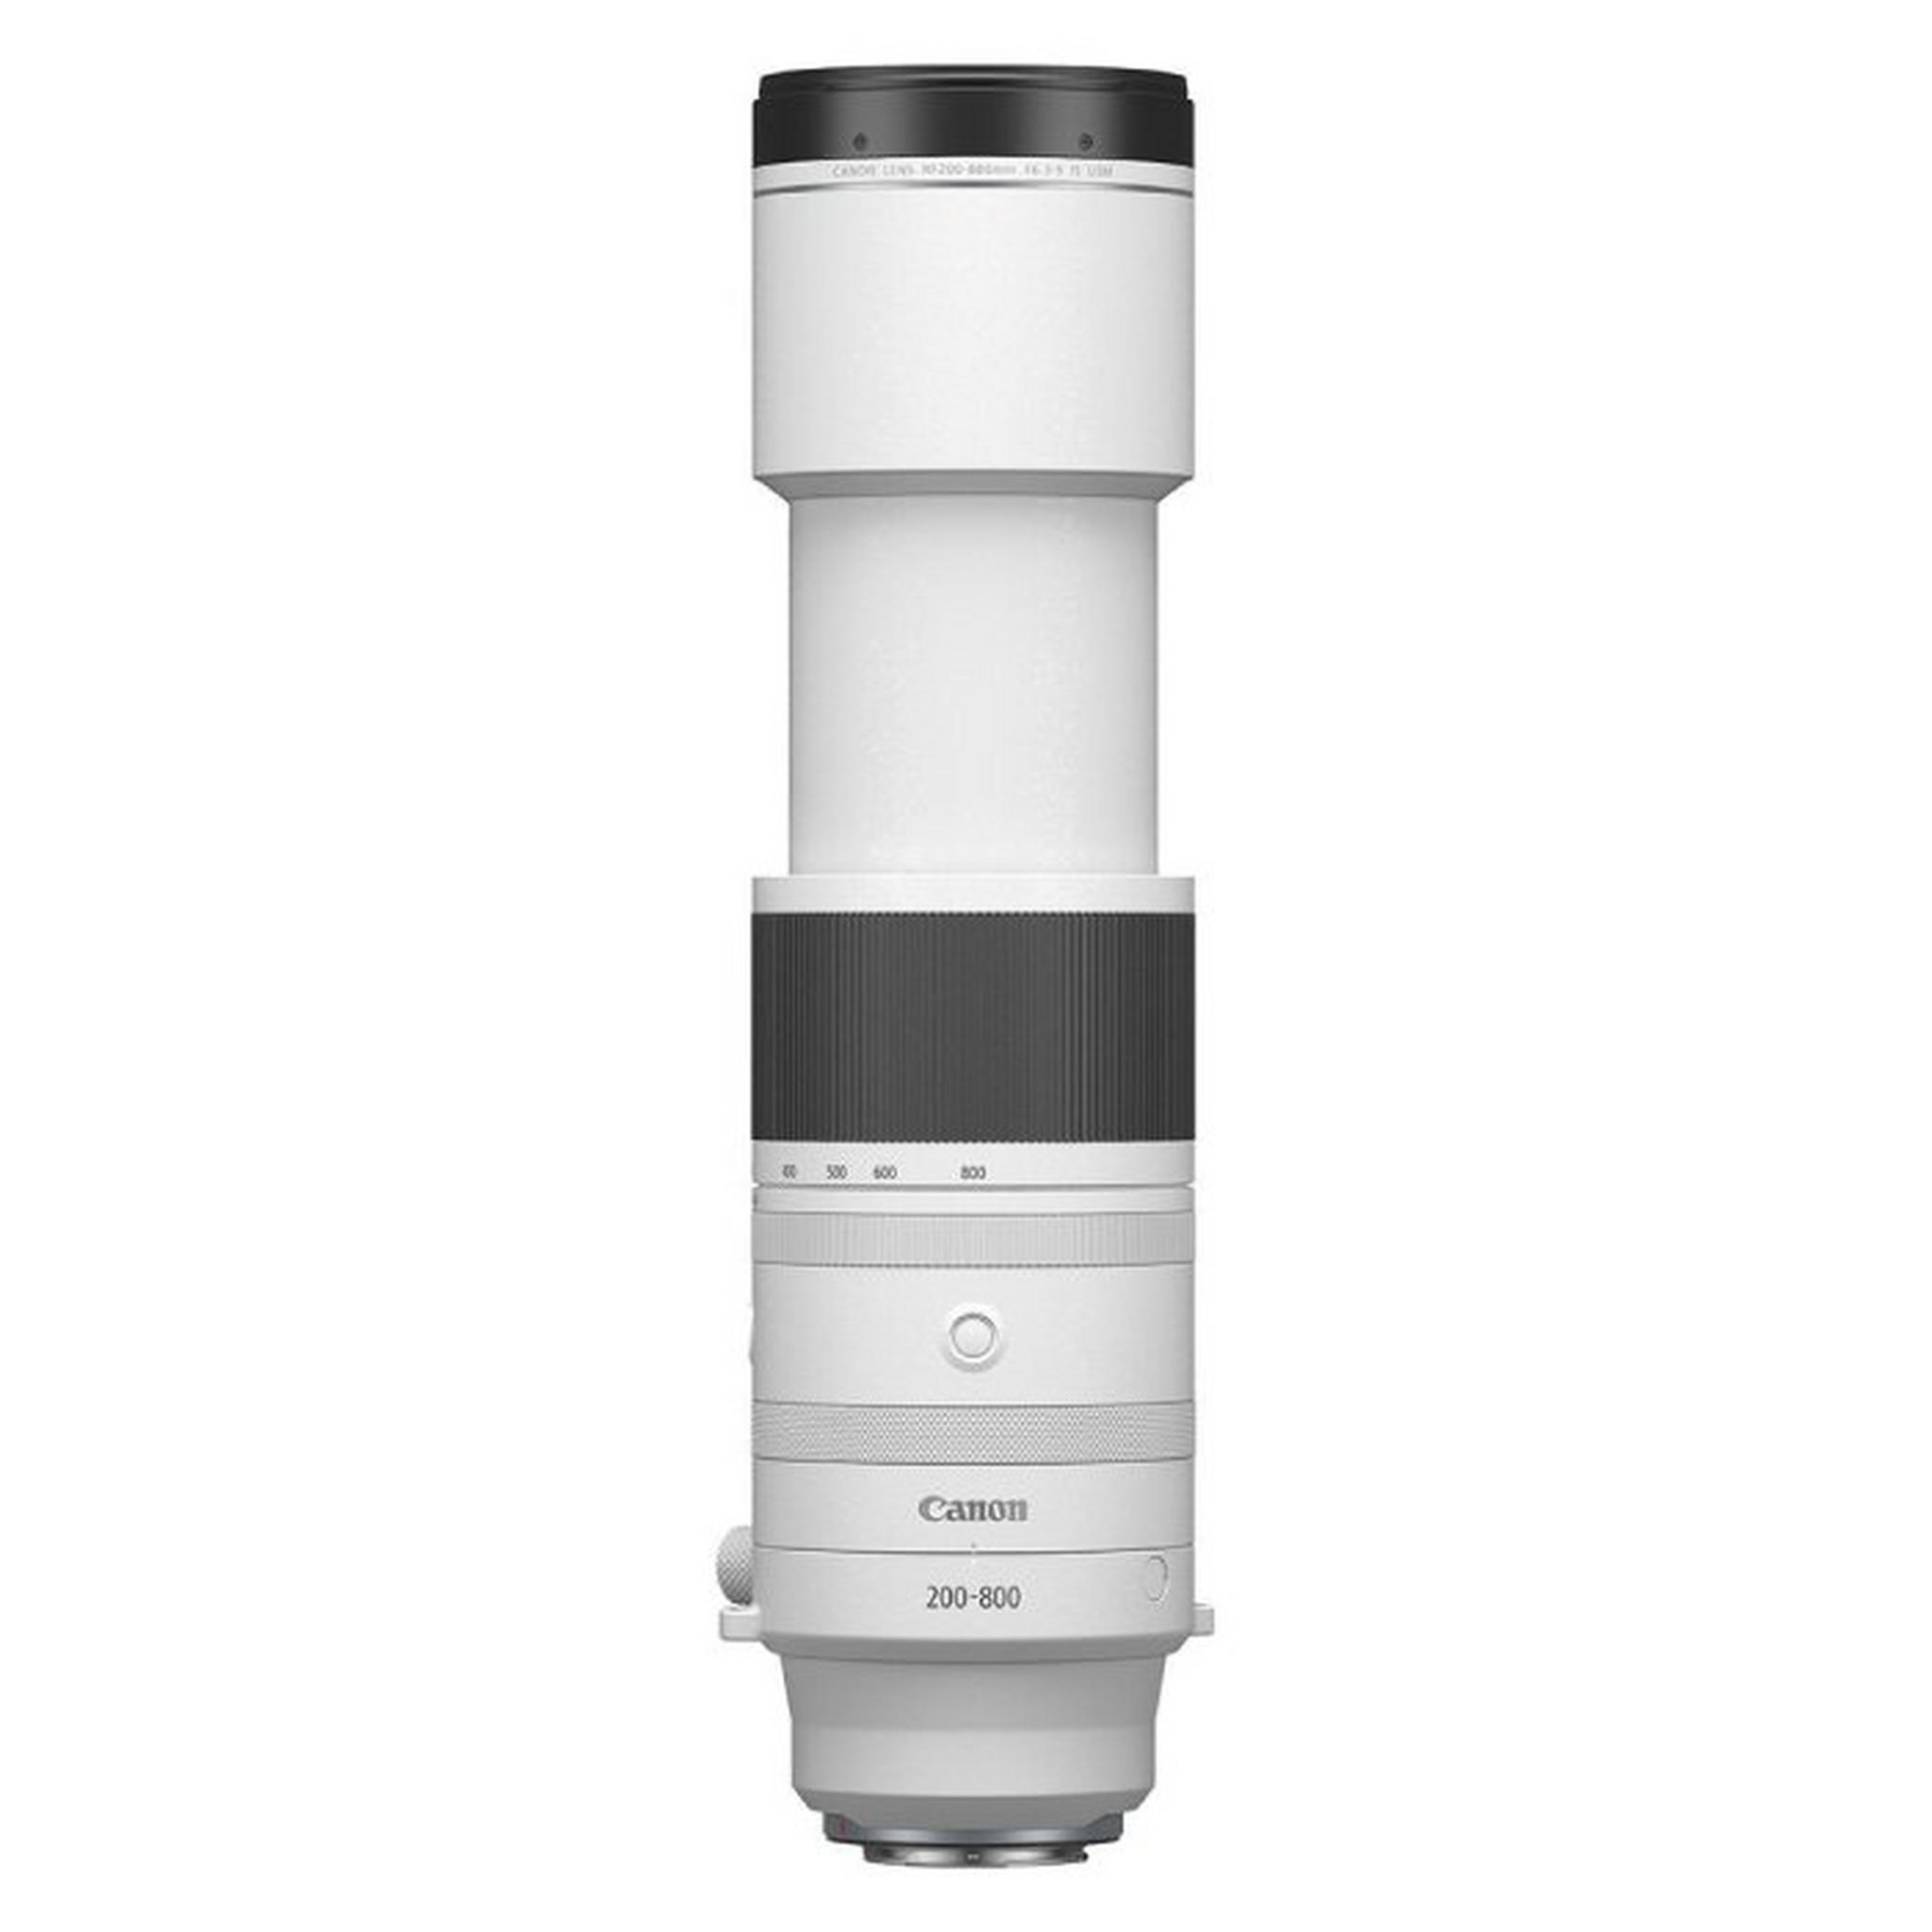 CANON RF 200-800MM Telephotozoom Lens, F6.3-9 IS USM, 6263C005AA – White